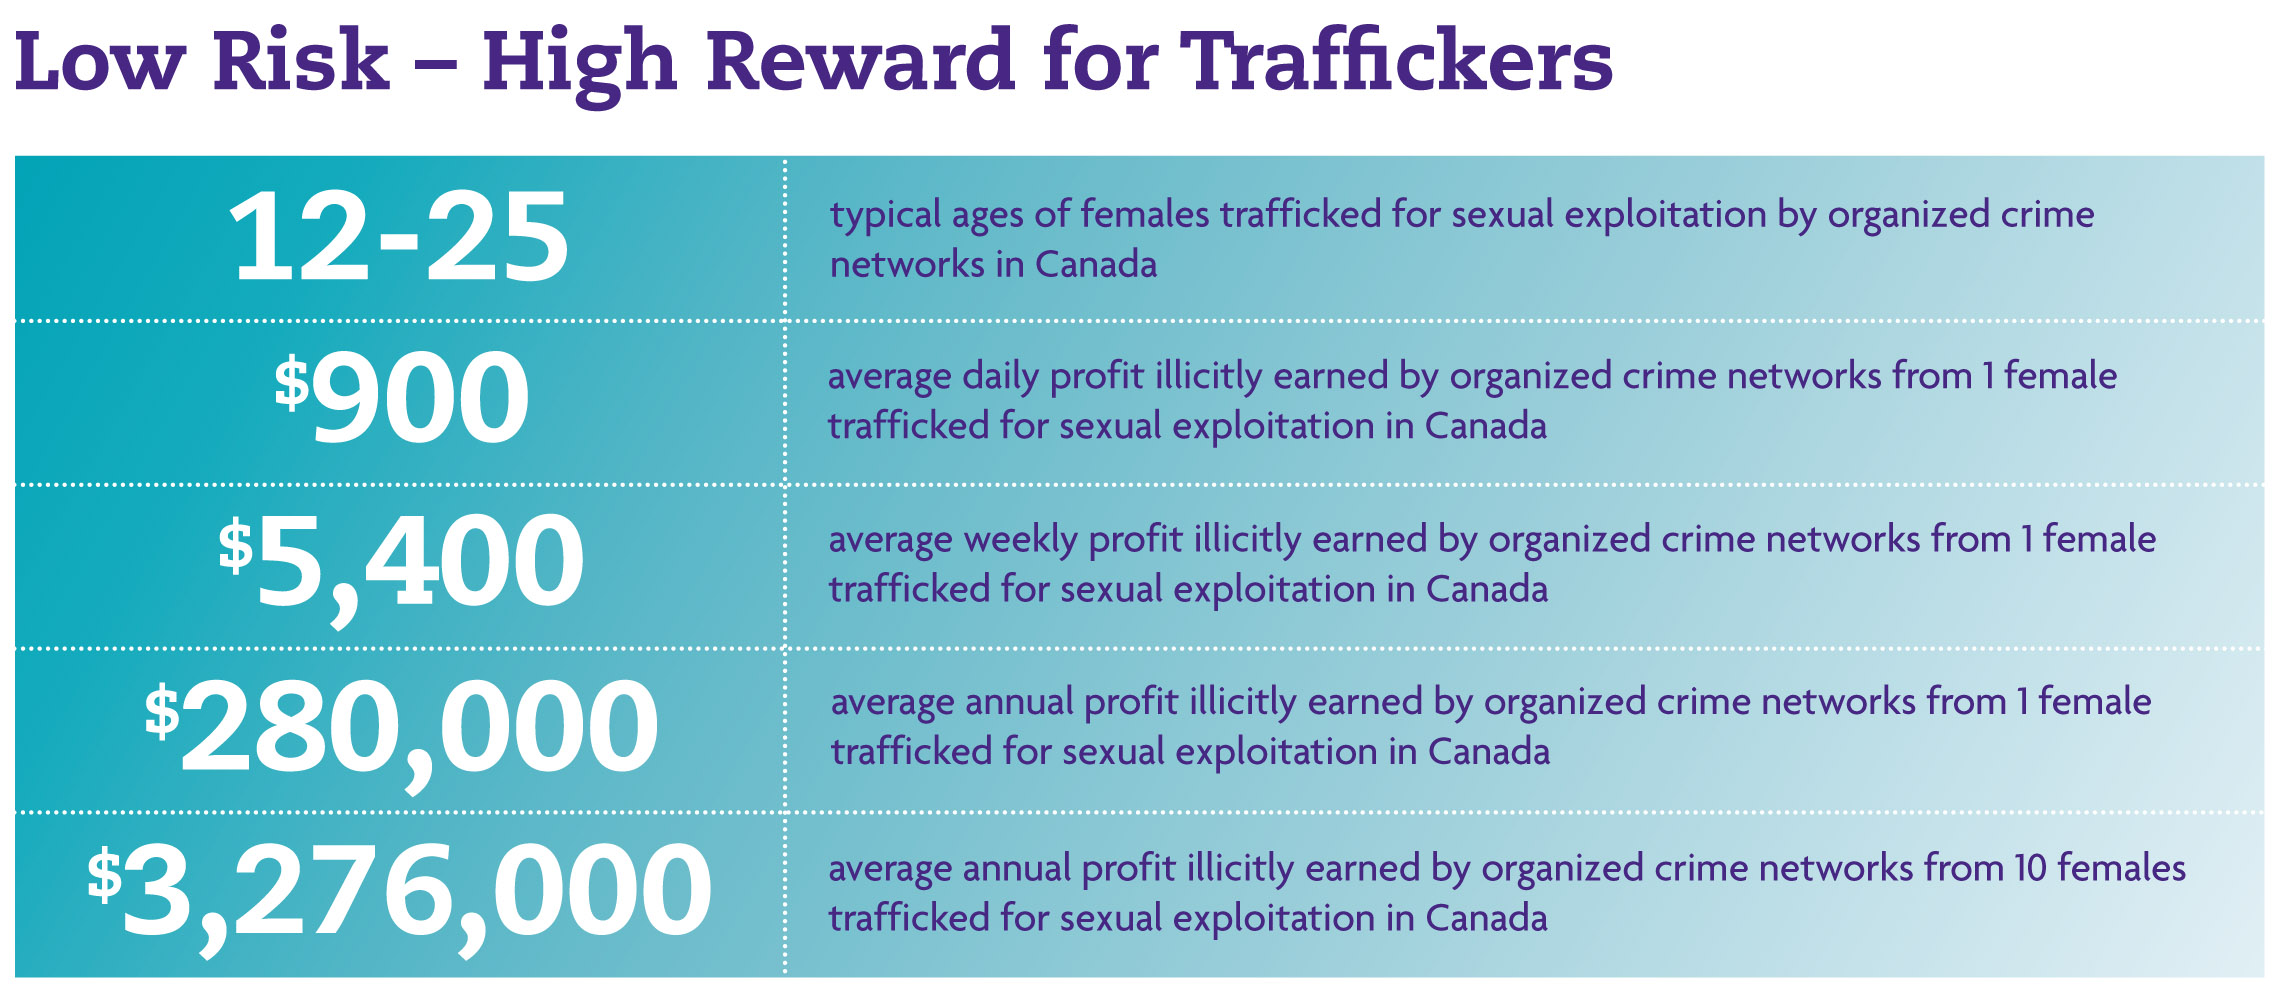 human trafficking solutions essay